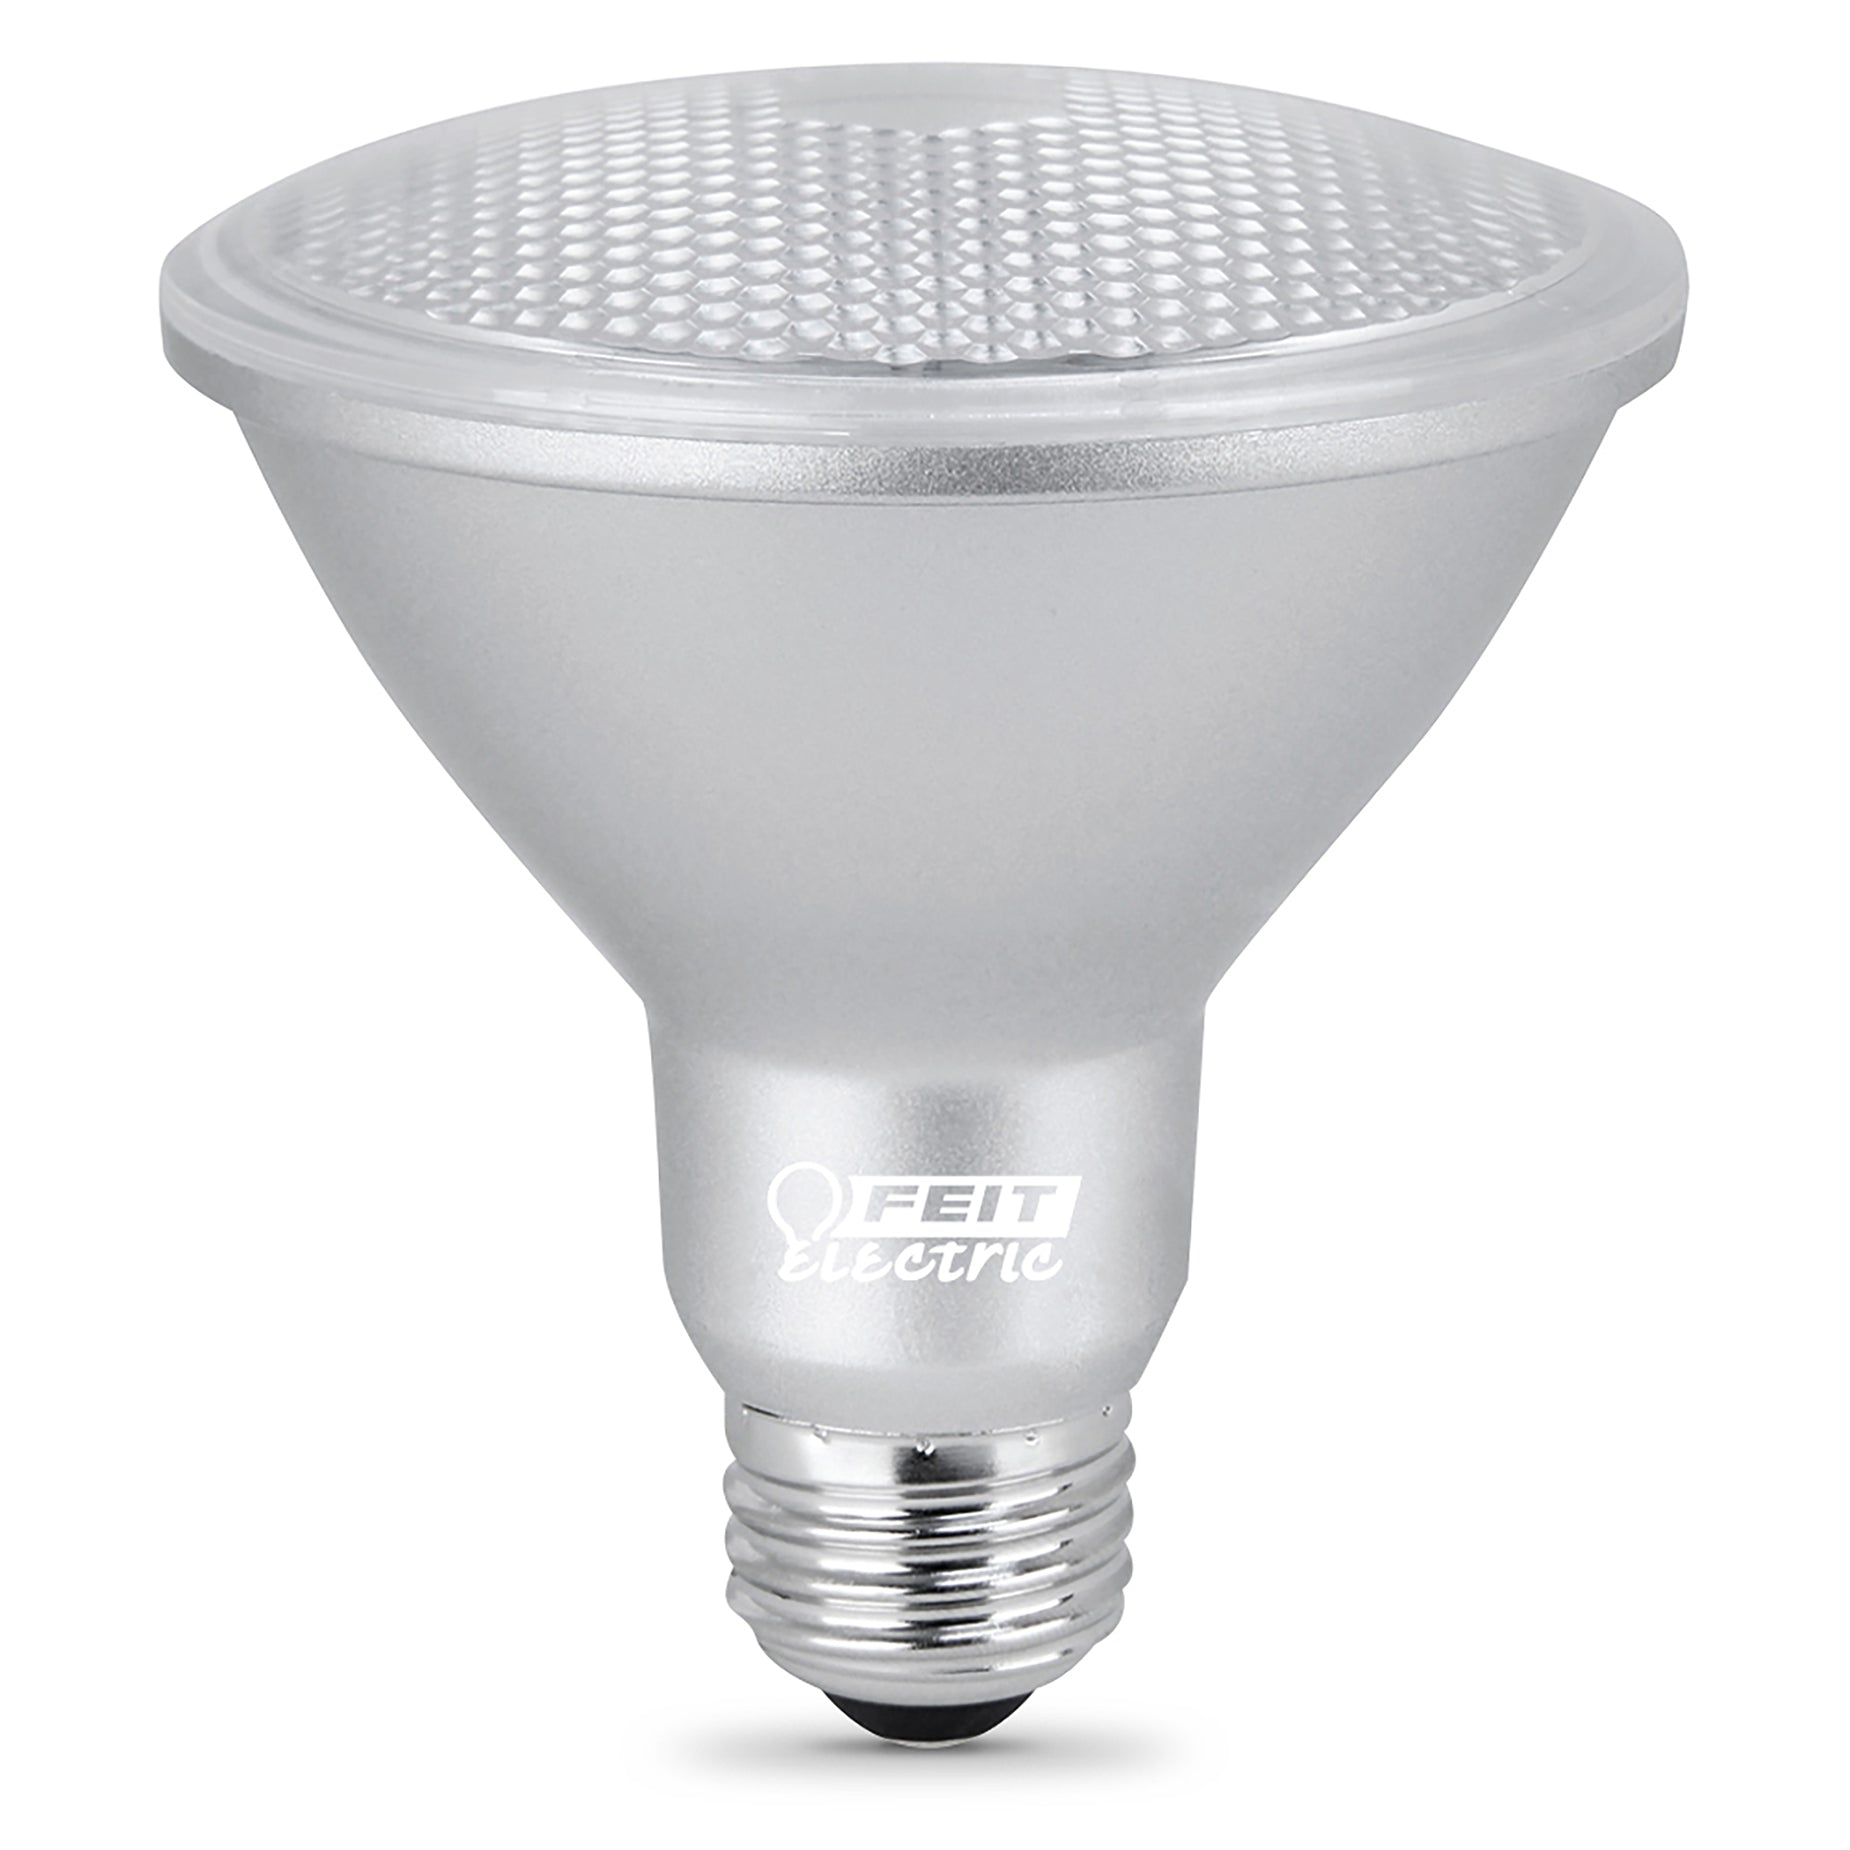 PAR30 LED Light Bulbs, 8.3 Watts, E26, Dimmable, 750 lumens, 3000K, outdoor security lighting